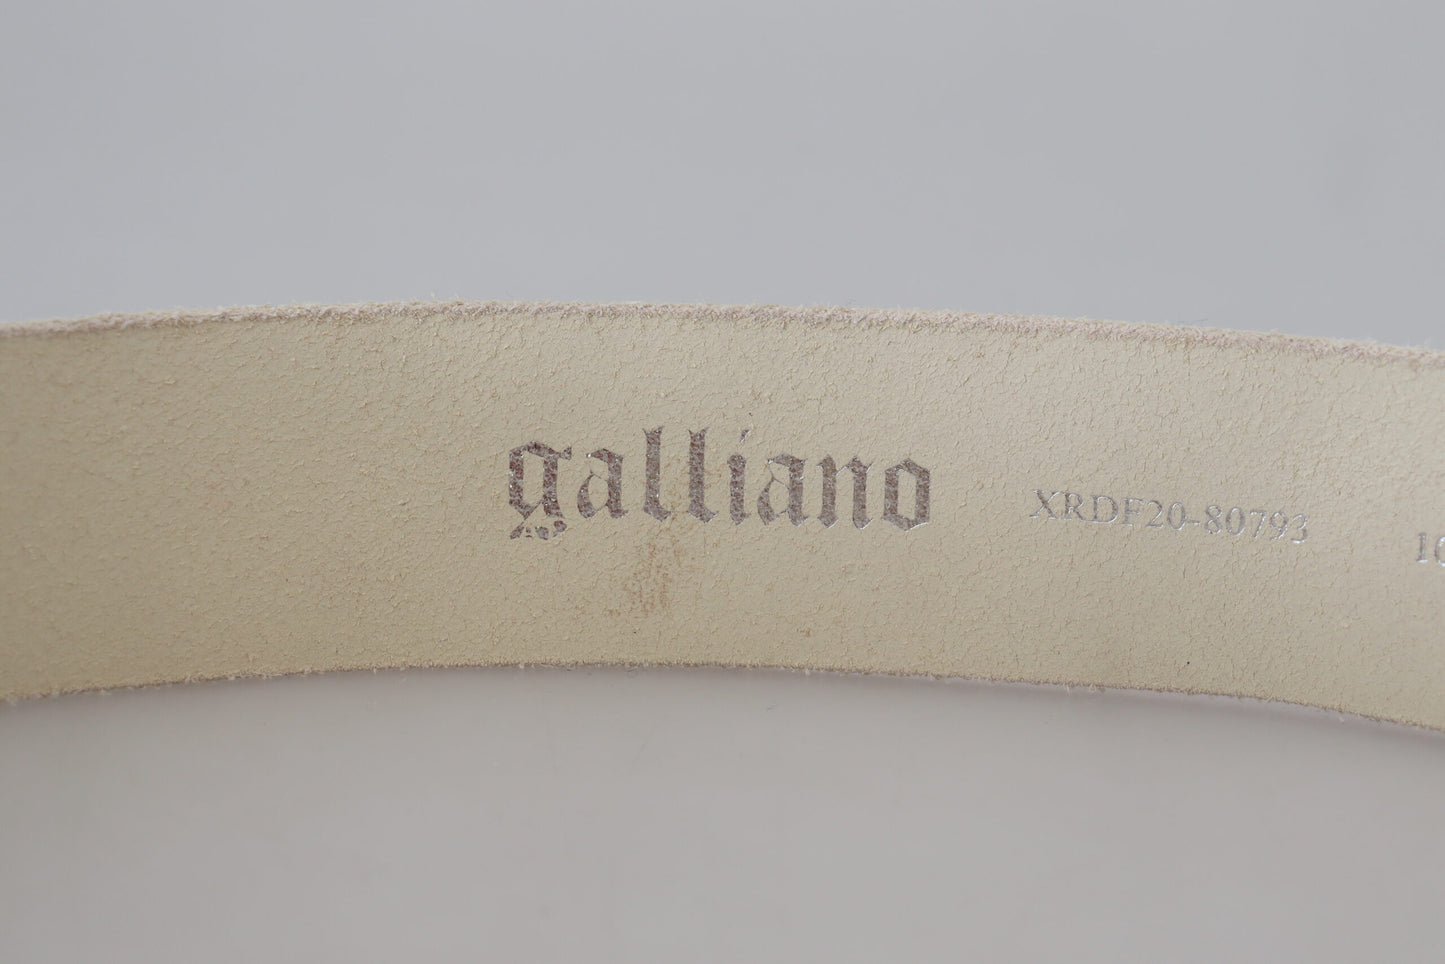 John Galliano Eleganter Modegürtel aus rosafarbenem Leder